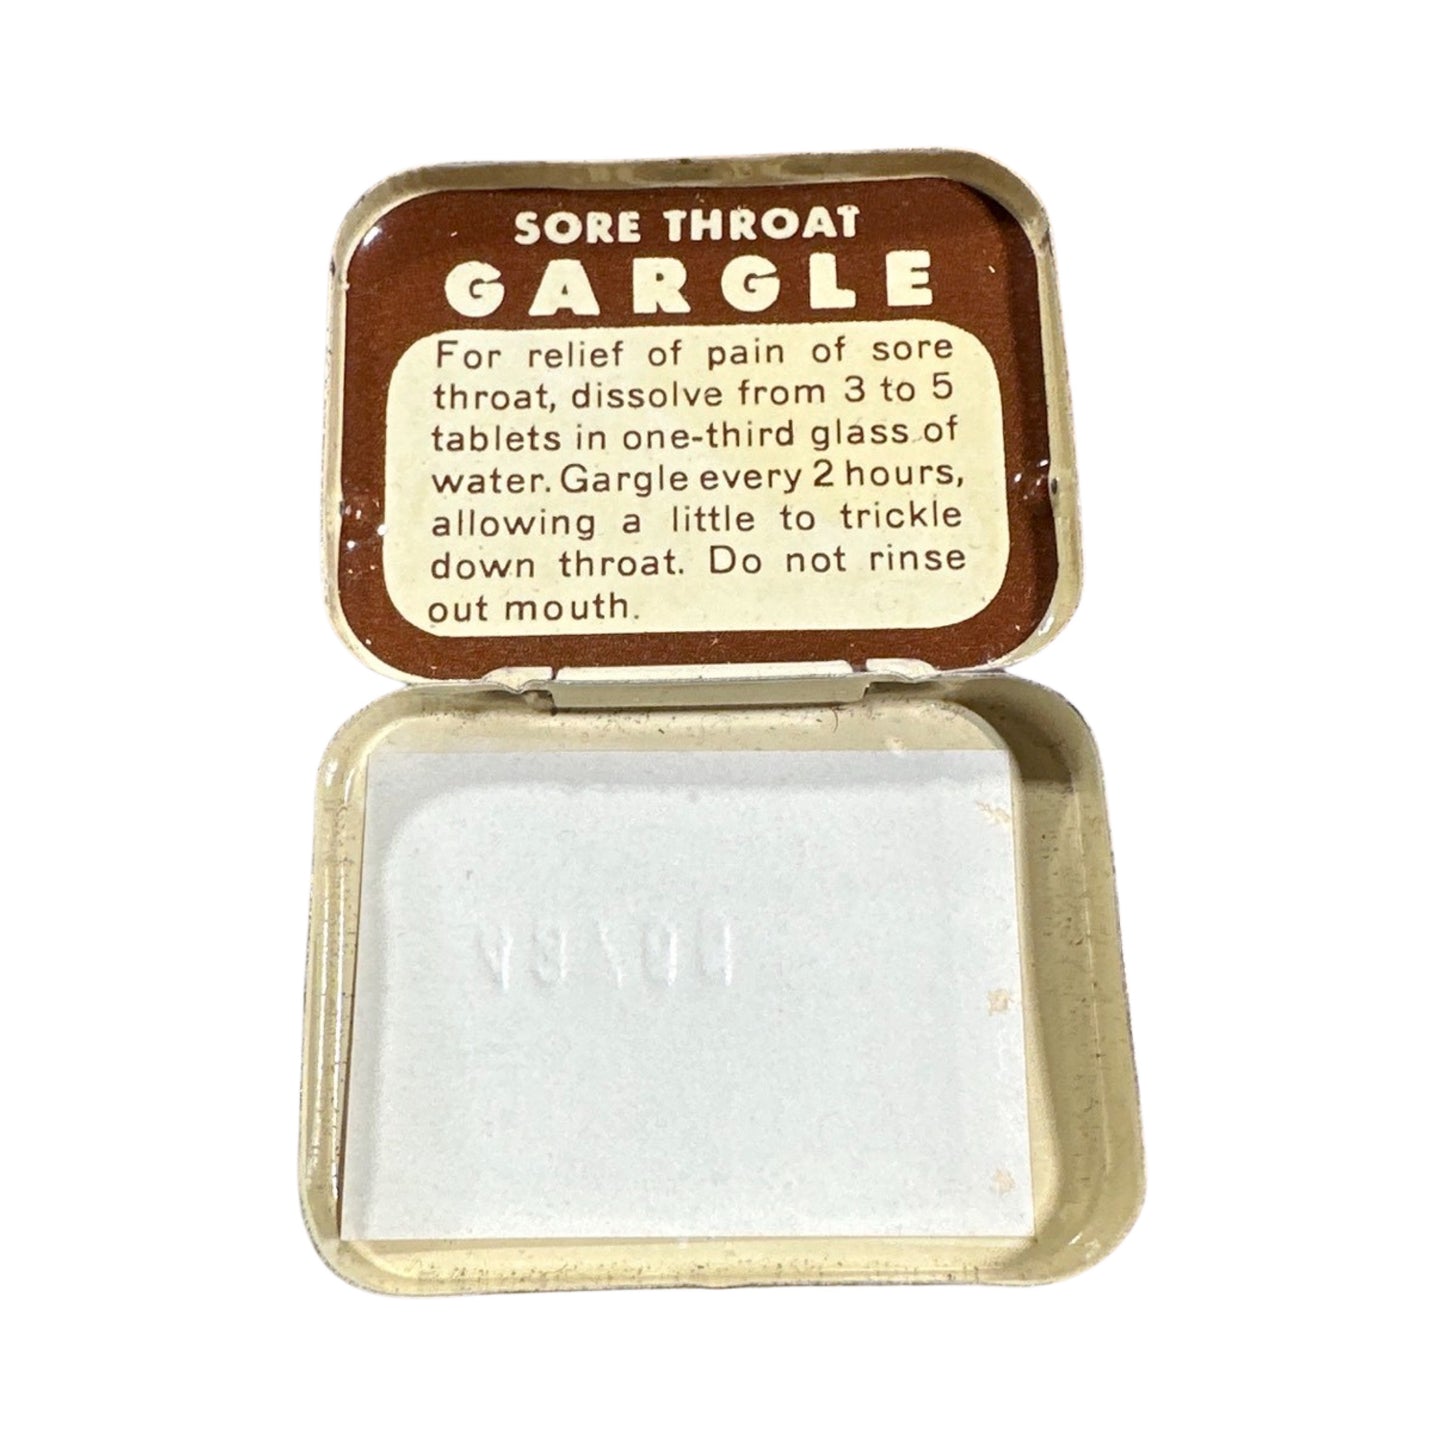 Vintage Bayer Aspirin Tin